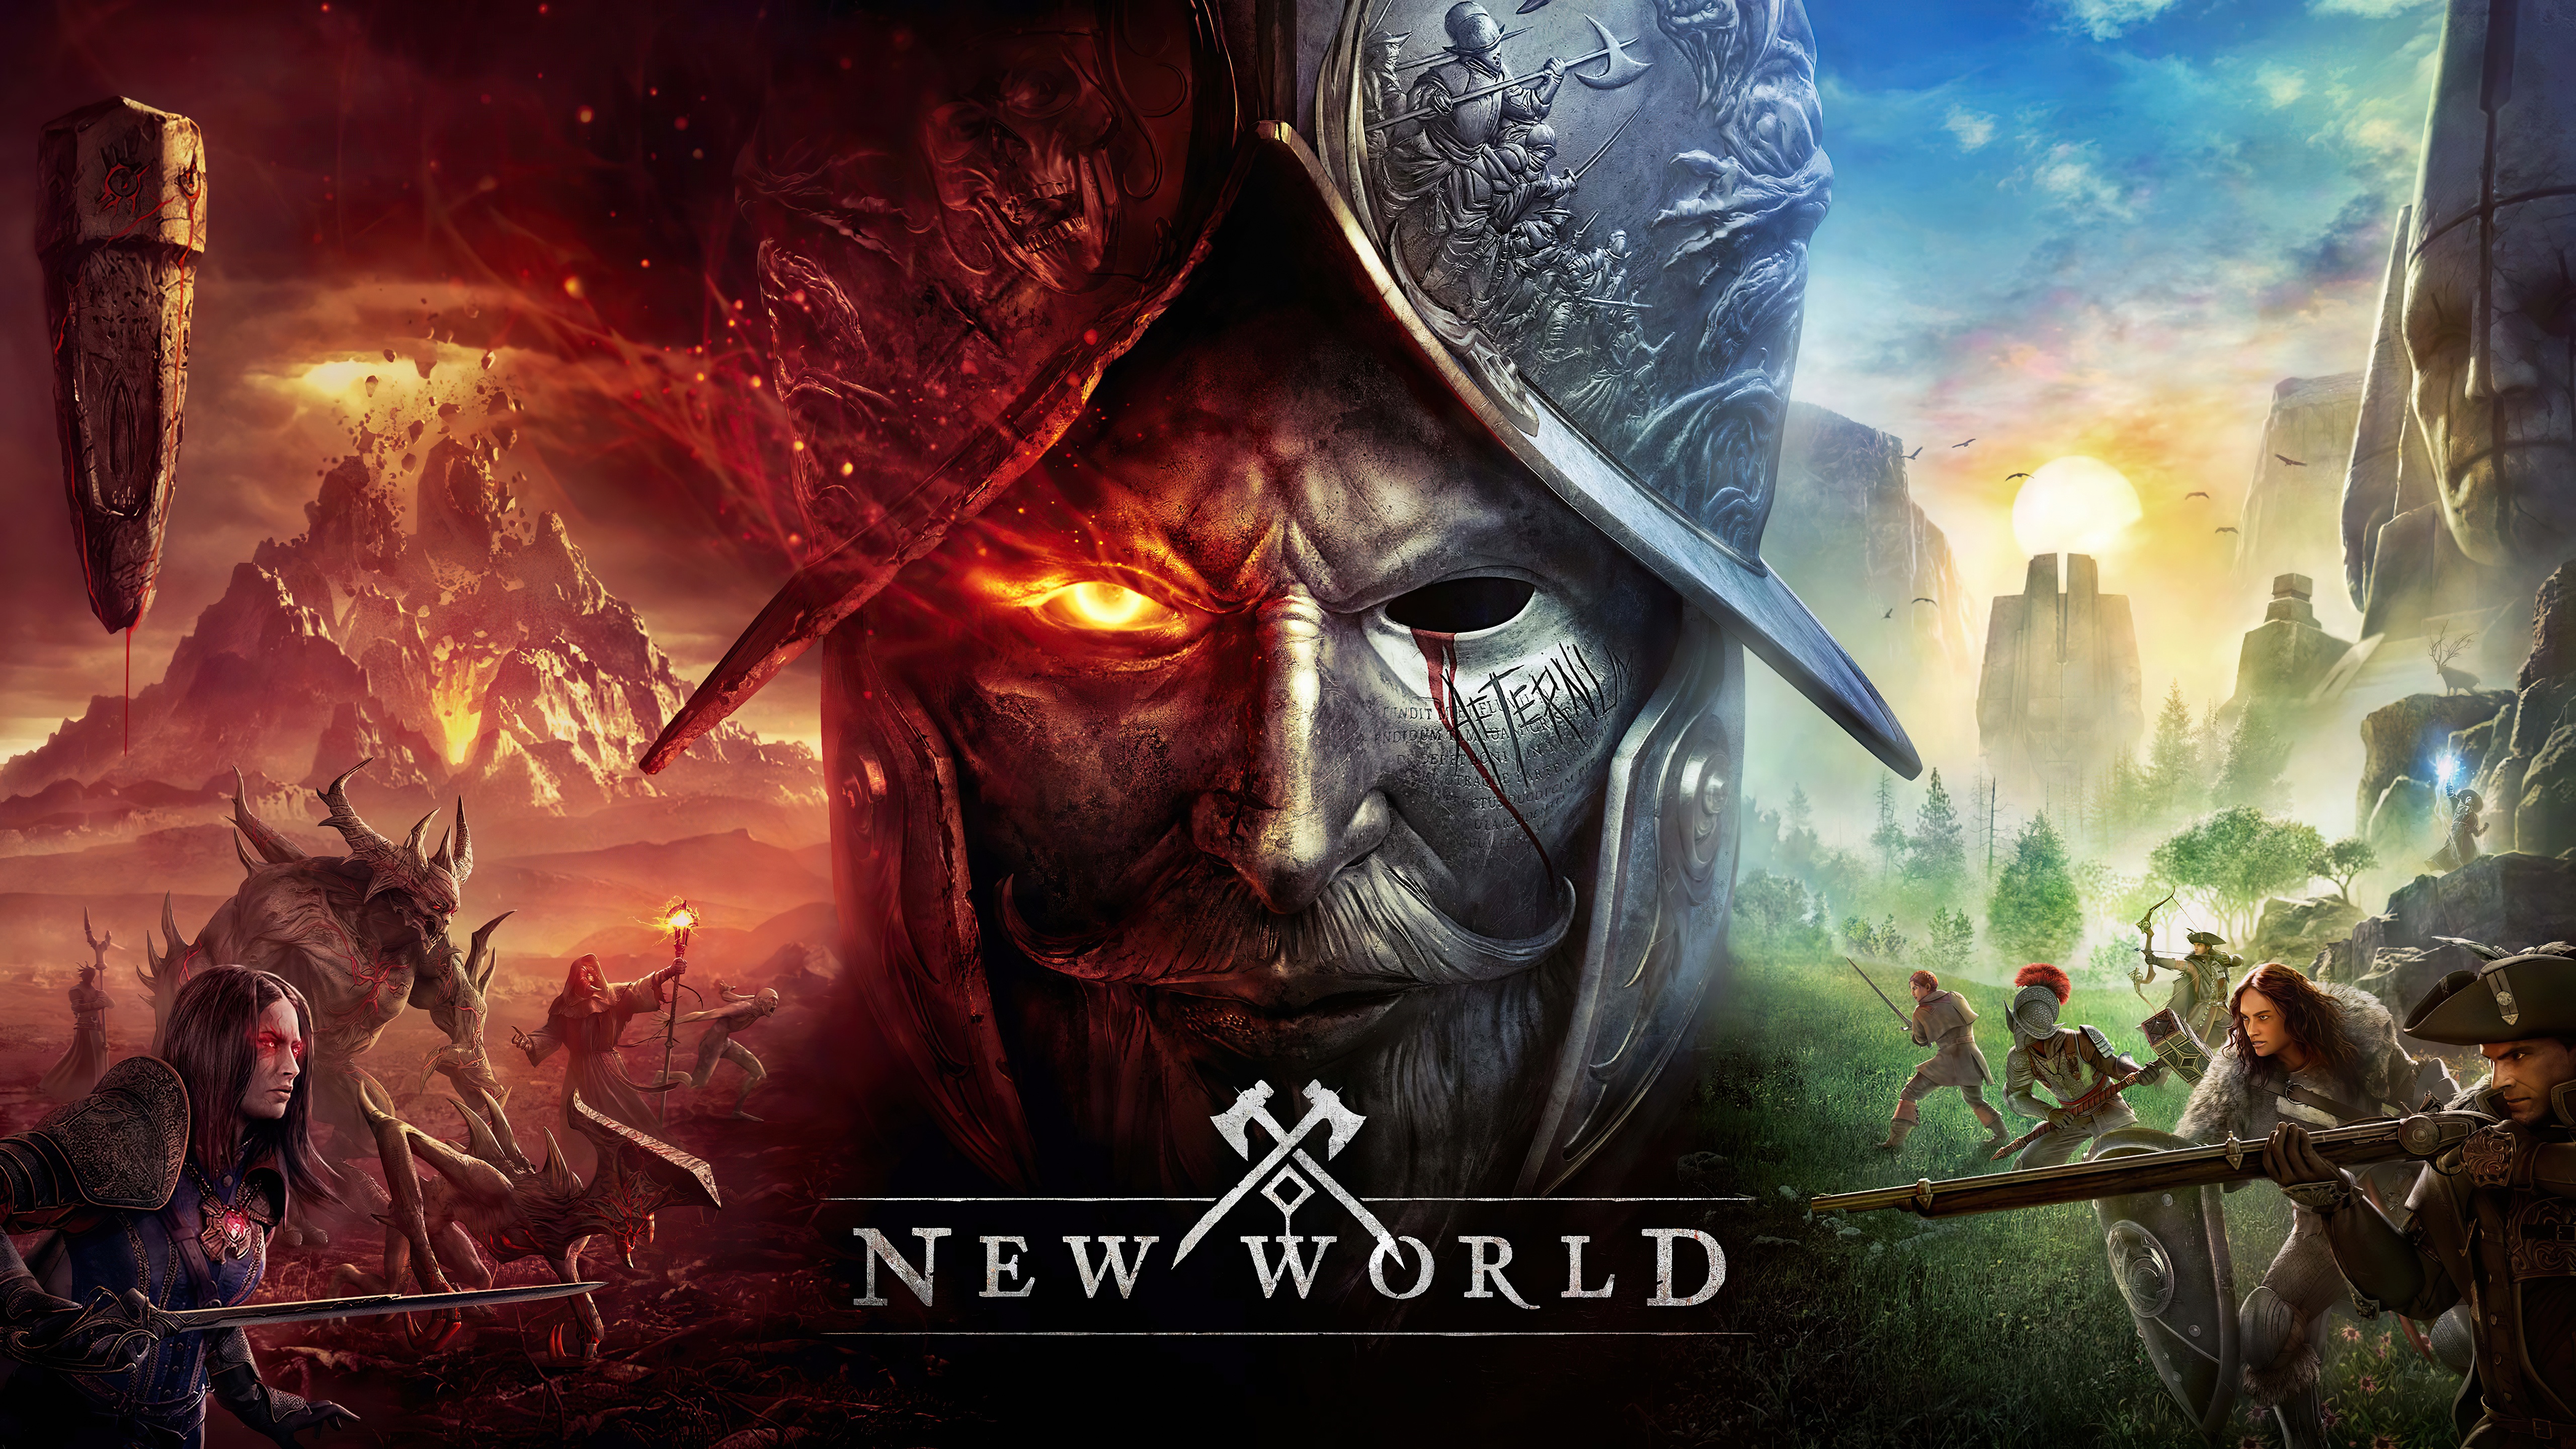 New world server. New World (игра). New World игра 2020. Обложки игр. New World картинки.